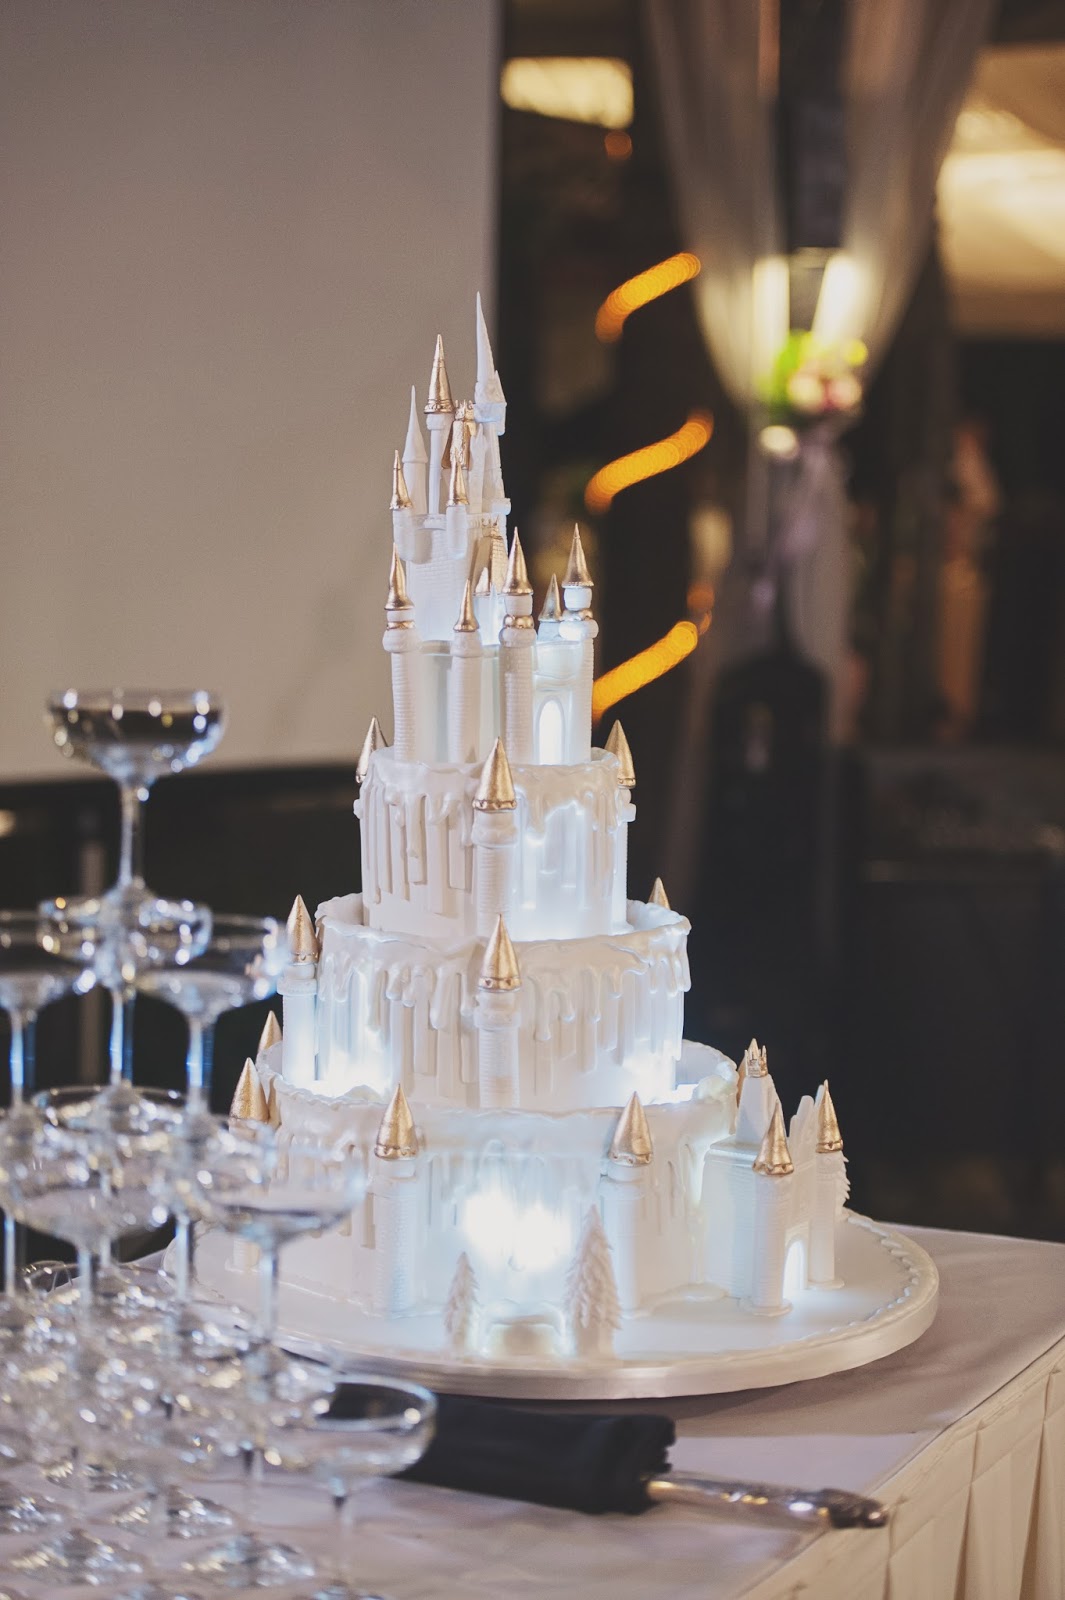 Disney-Themed Cakes Will Bring Some Magic To Your Wedding | WeddingElation